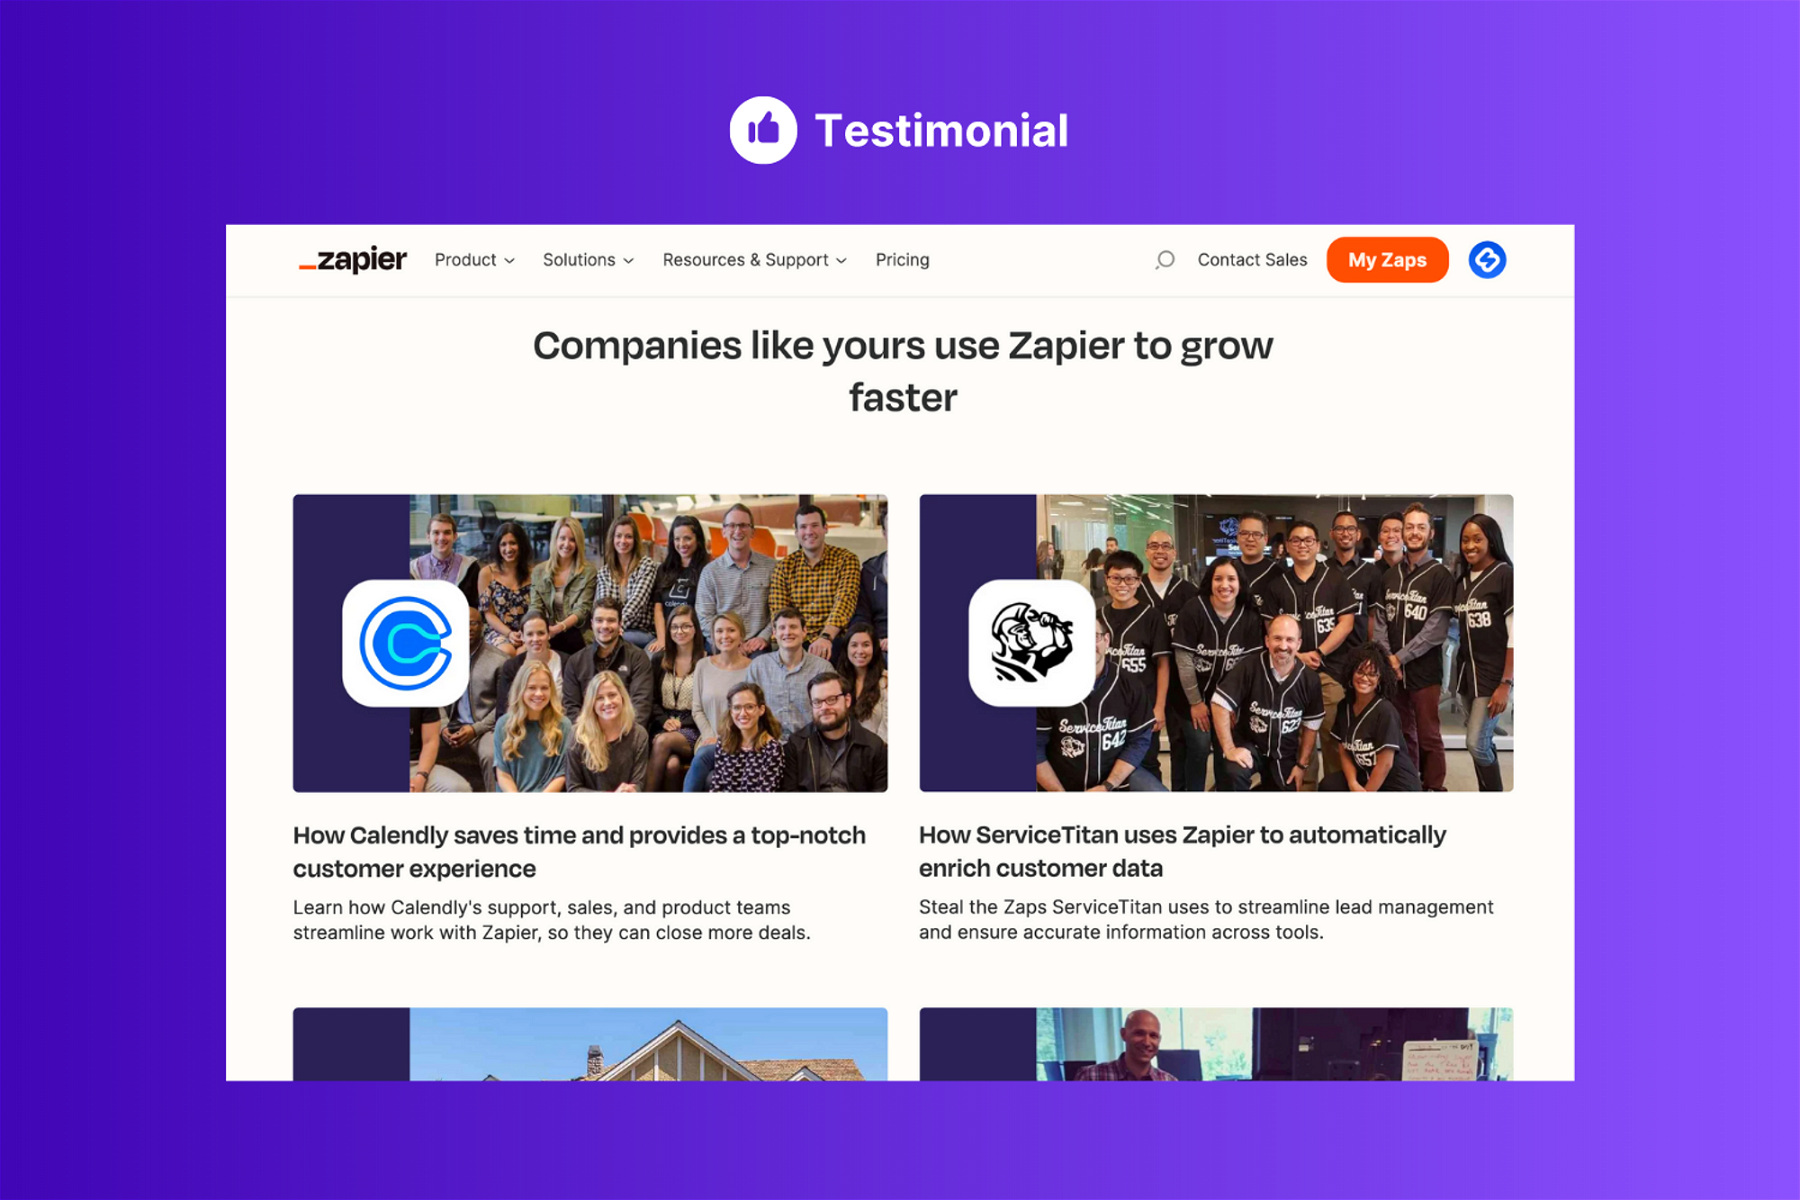 Zapier’s testimonial/success story page